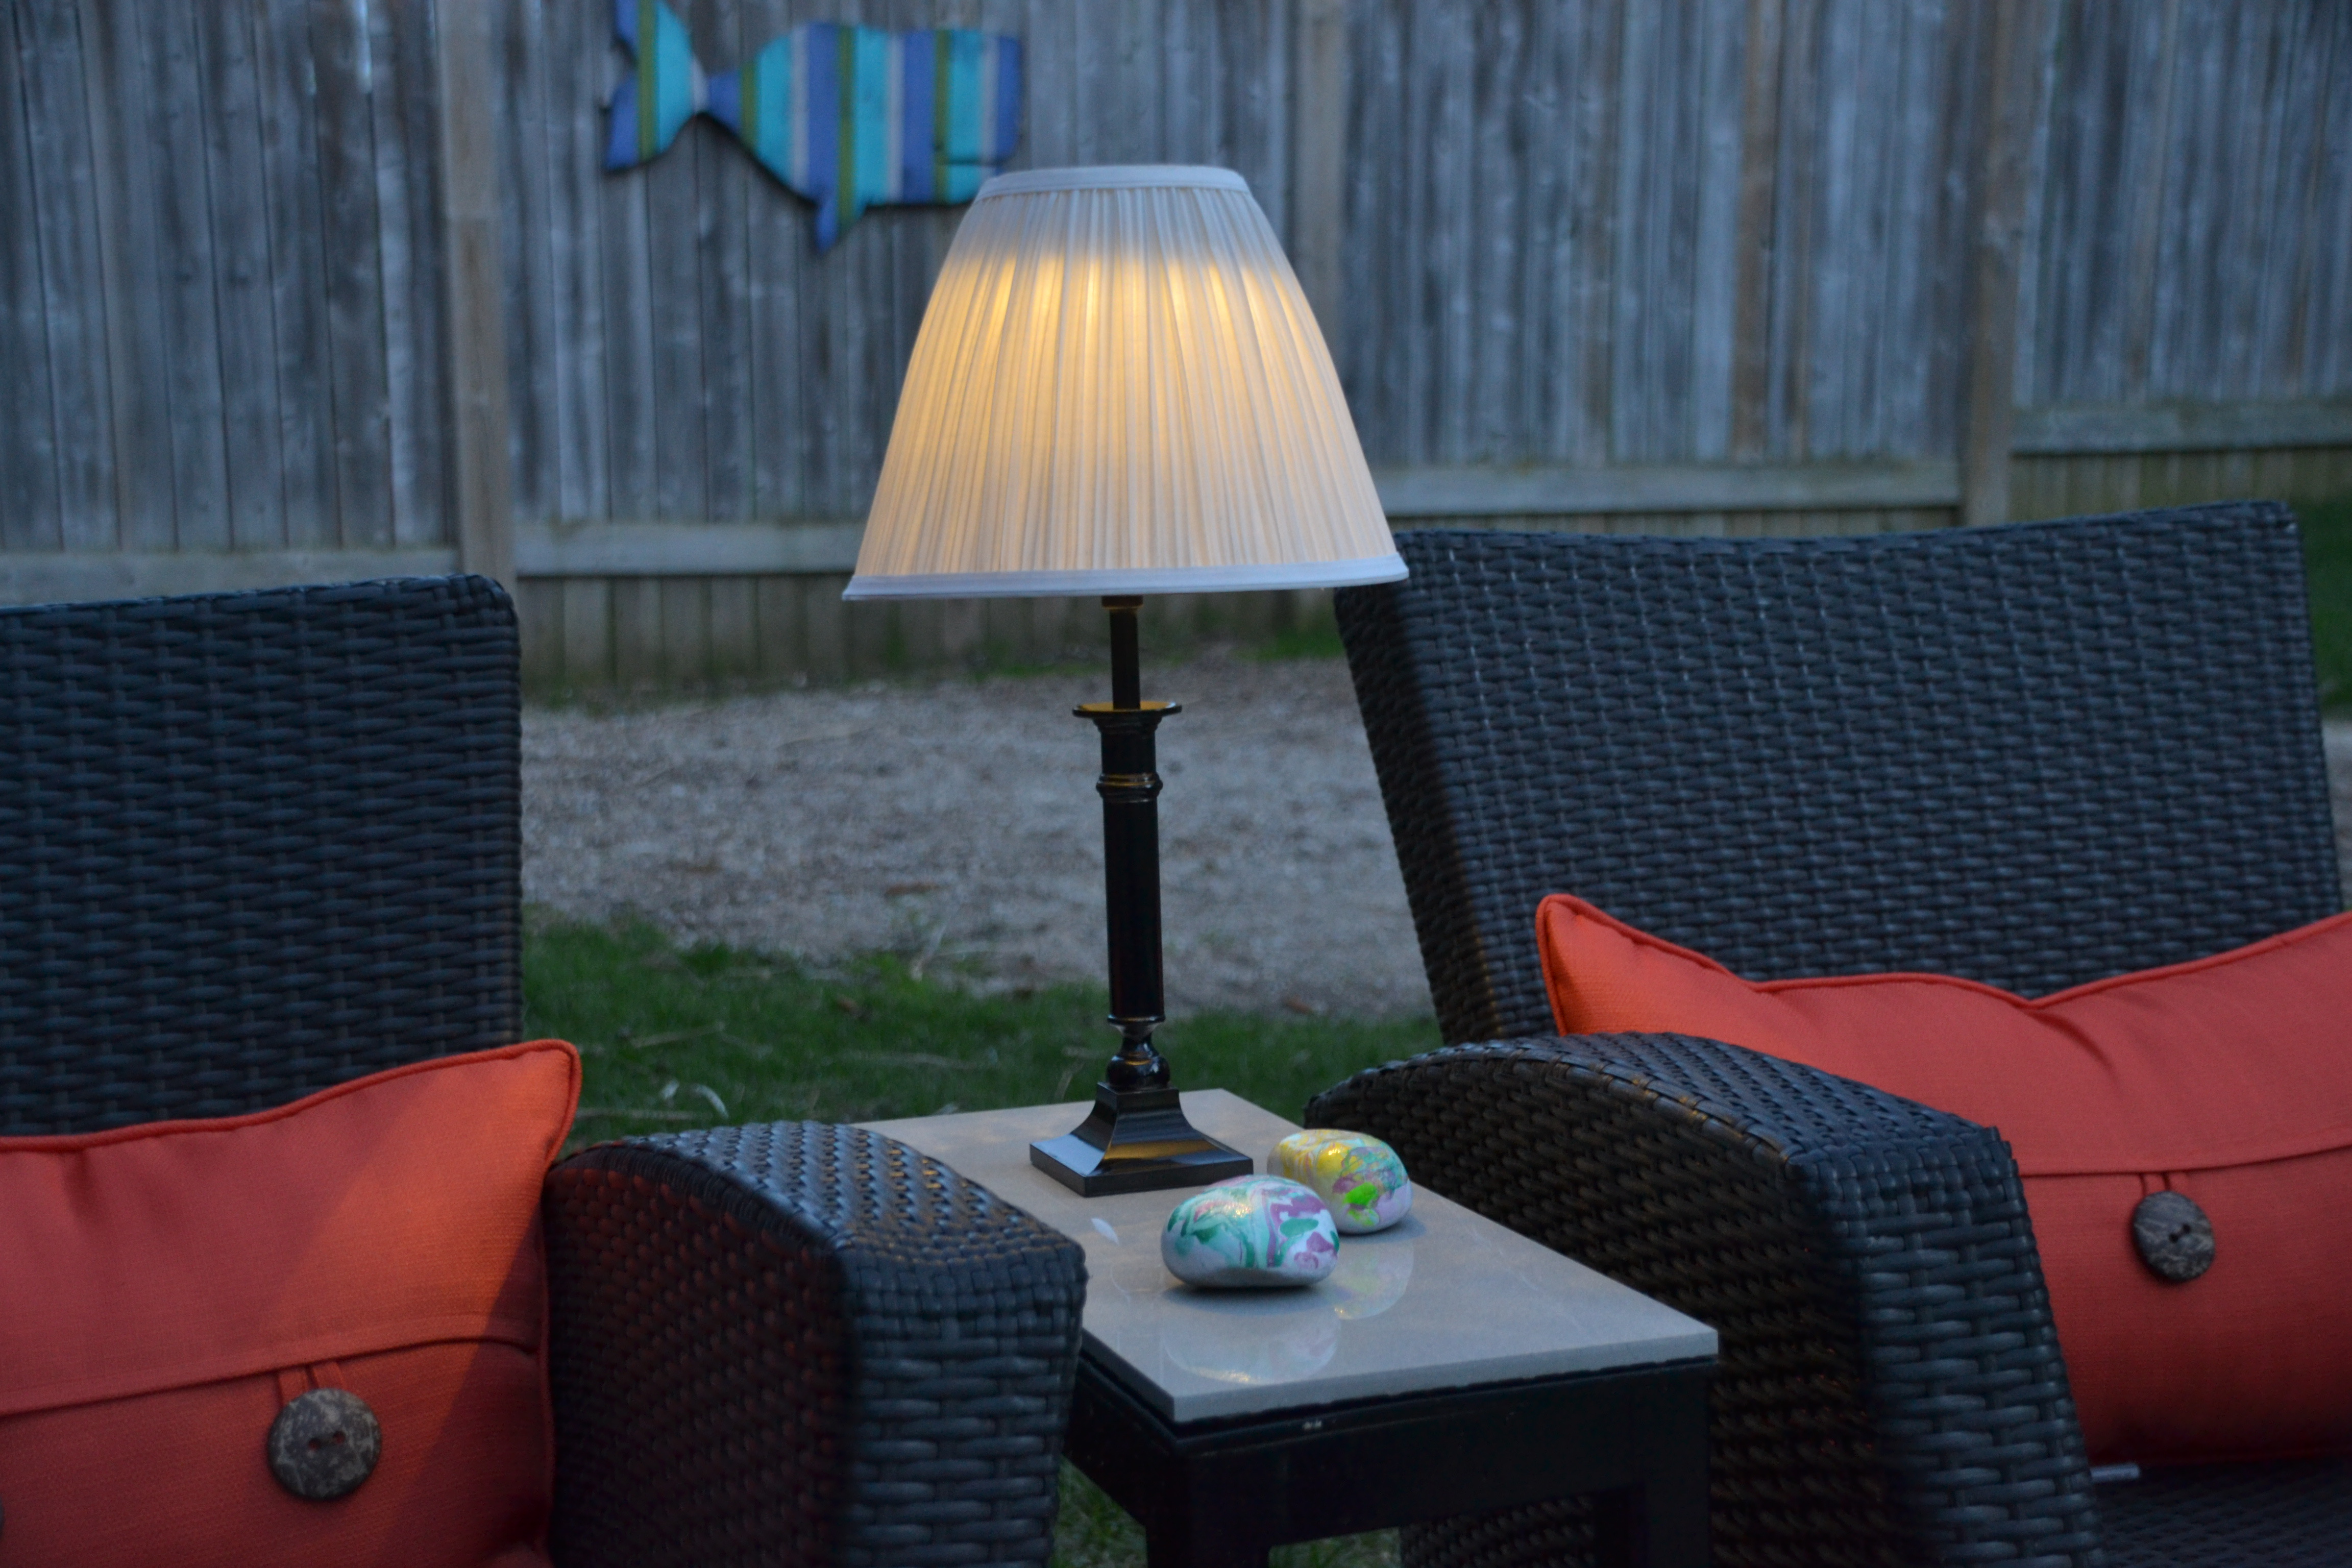 Solar lamp, outdoor lighting, patio lighting, DIY solar lamp, DIY solar lighting